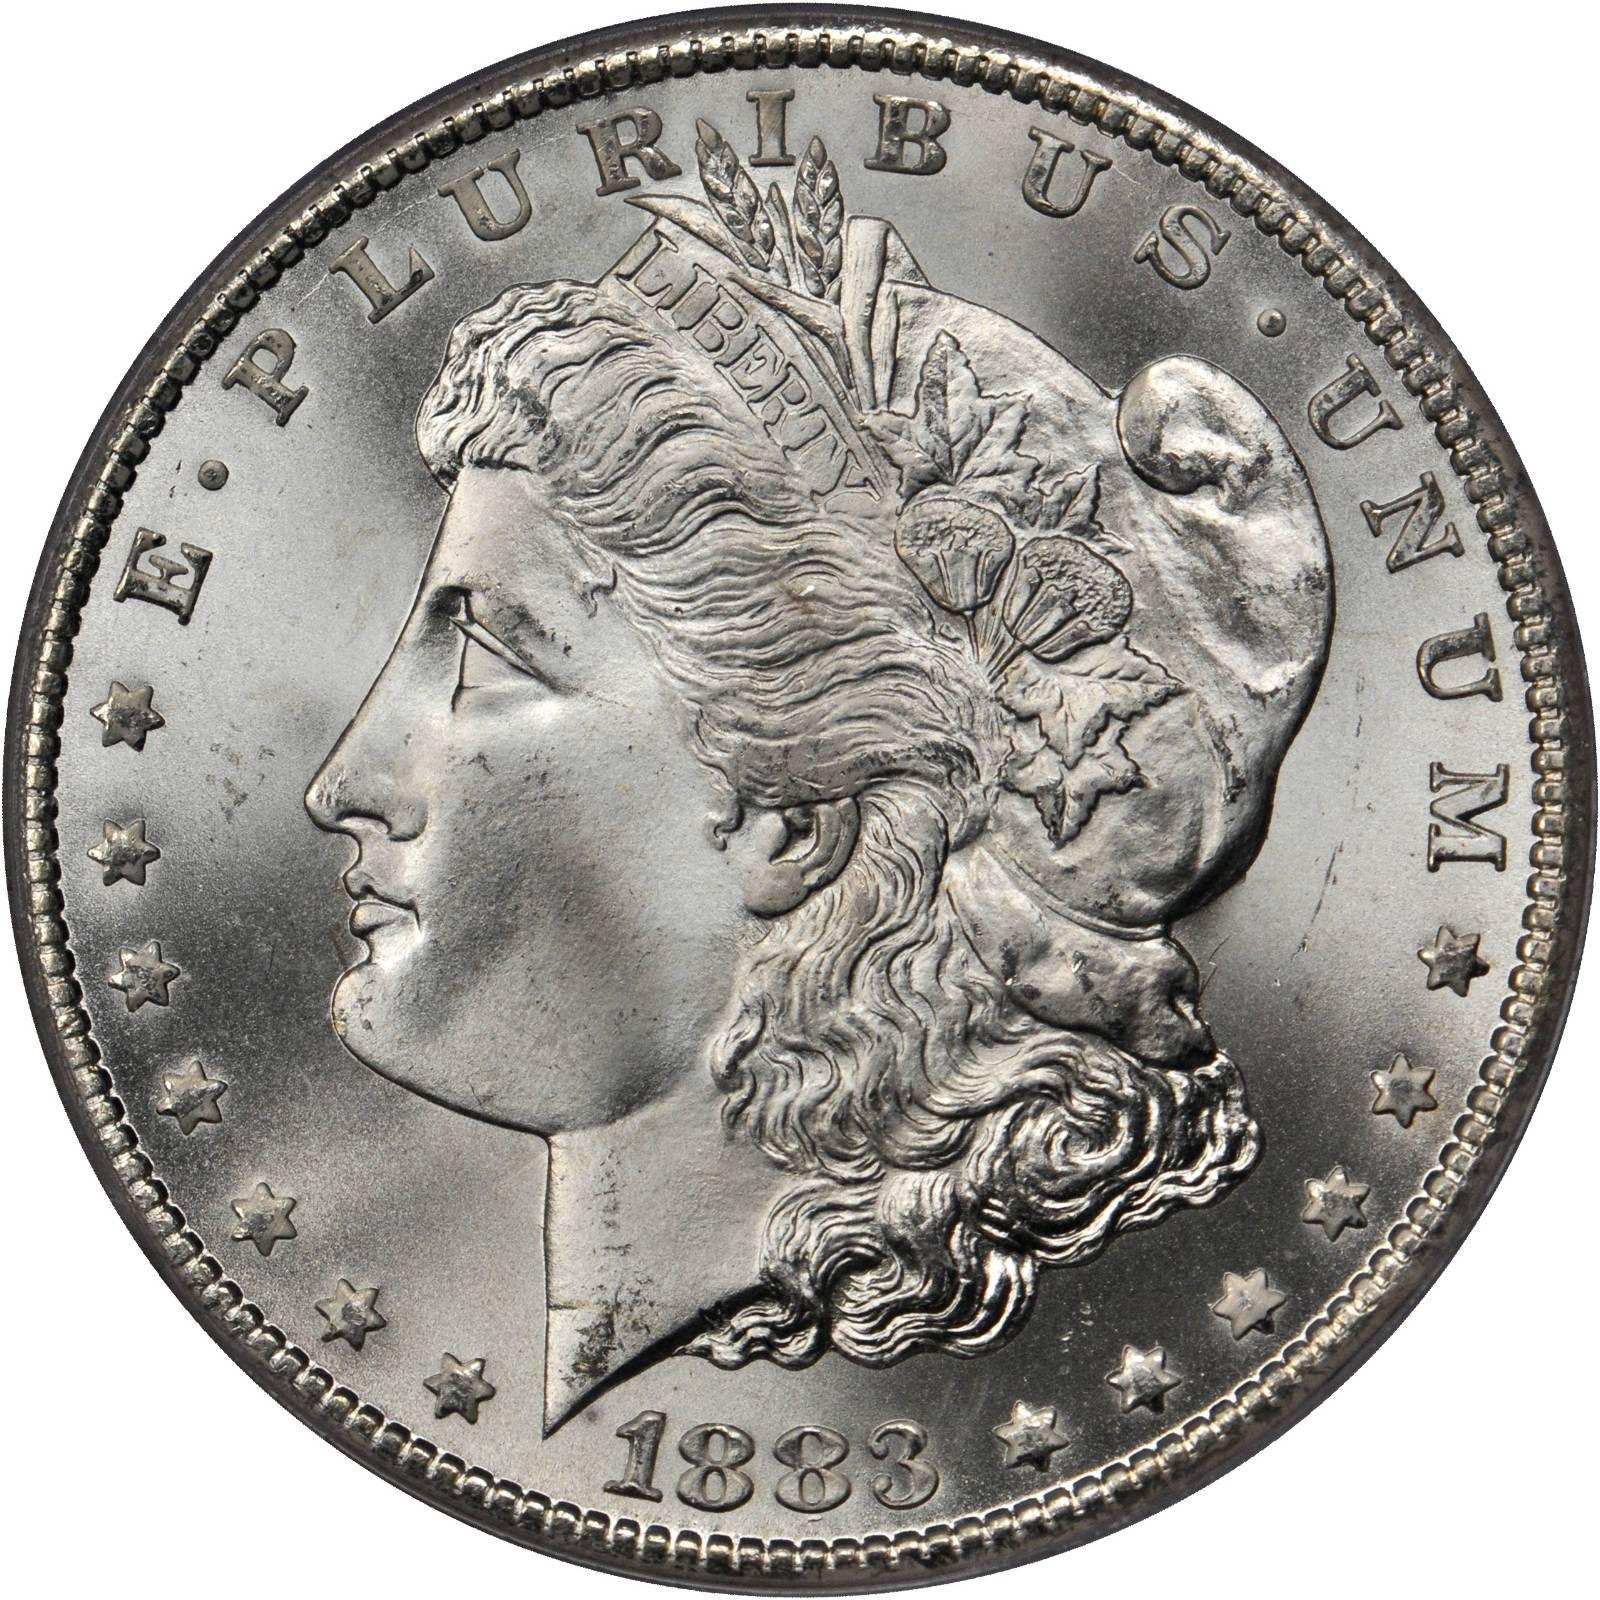 1883 Carston City Morgan Silver Dollar Coin, CC Mint Mark, $1 US Coin